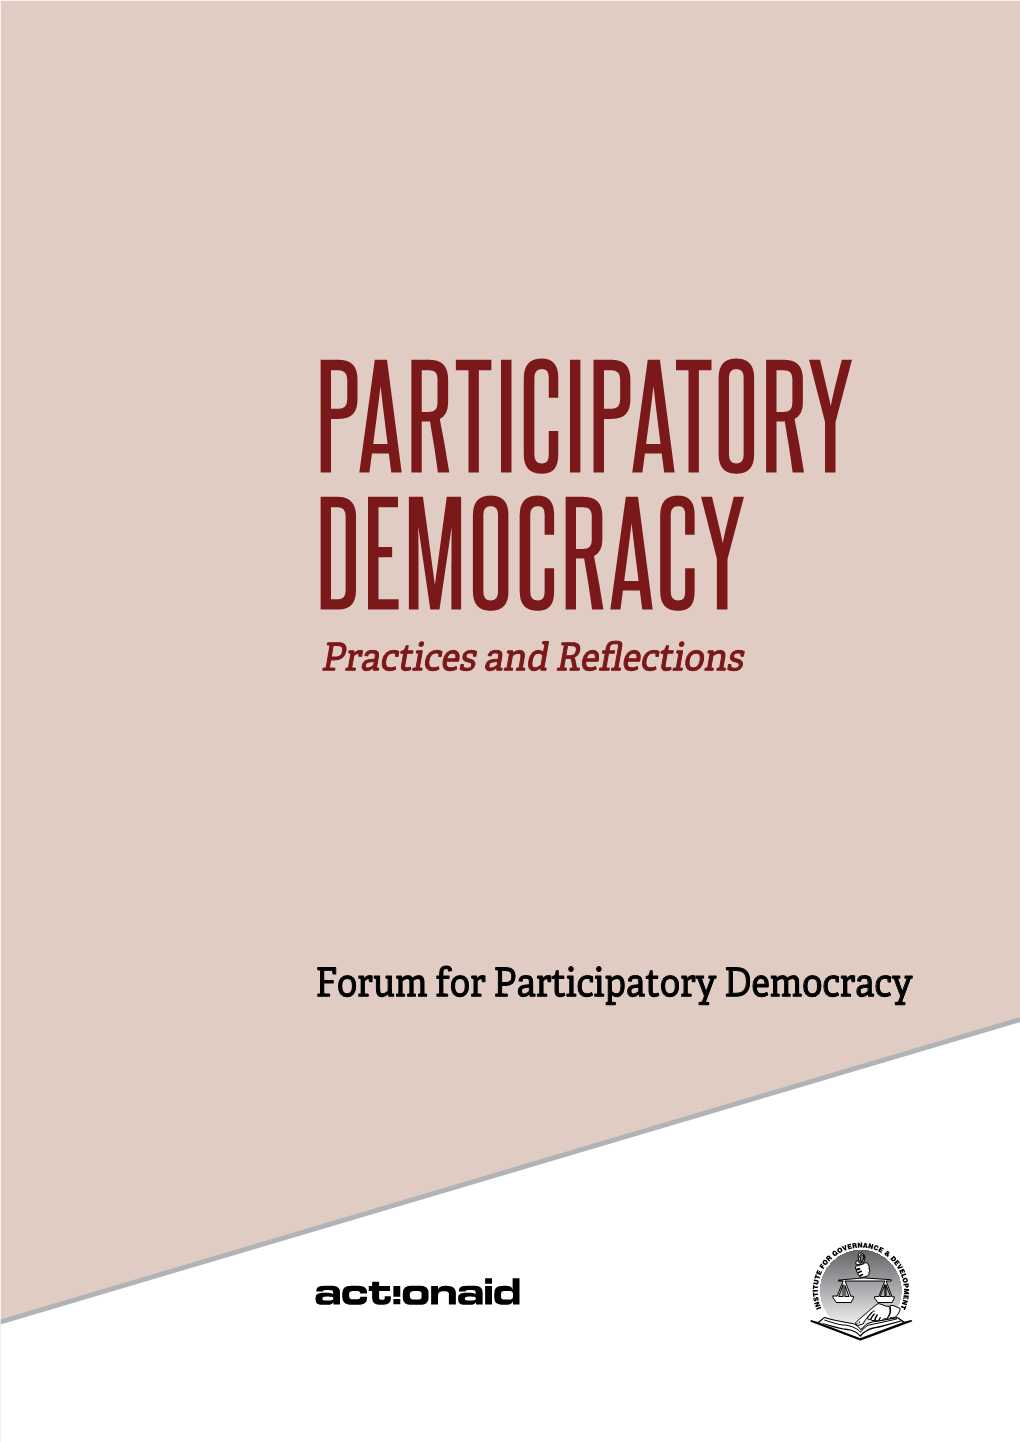 Forum for Participatory Democracy